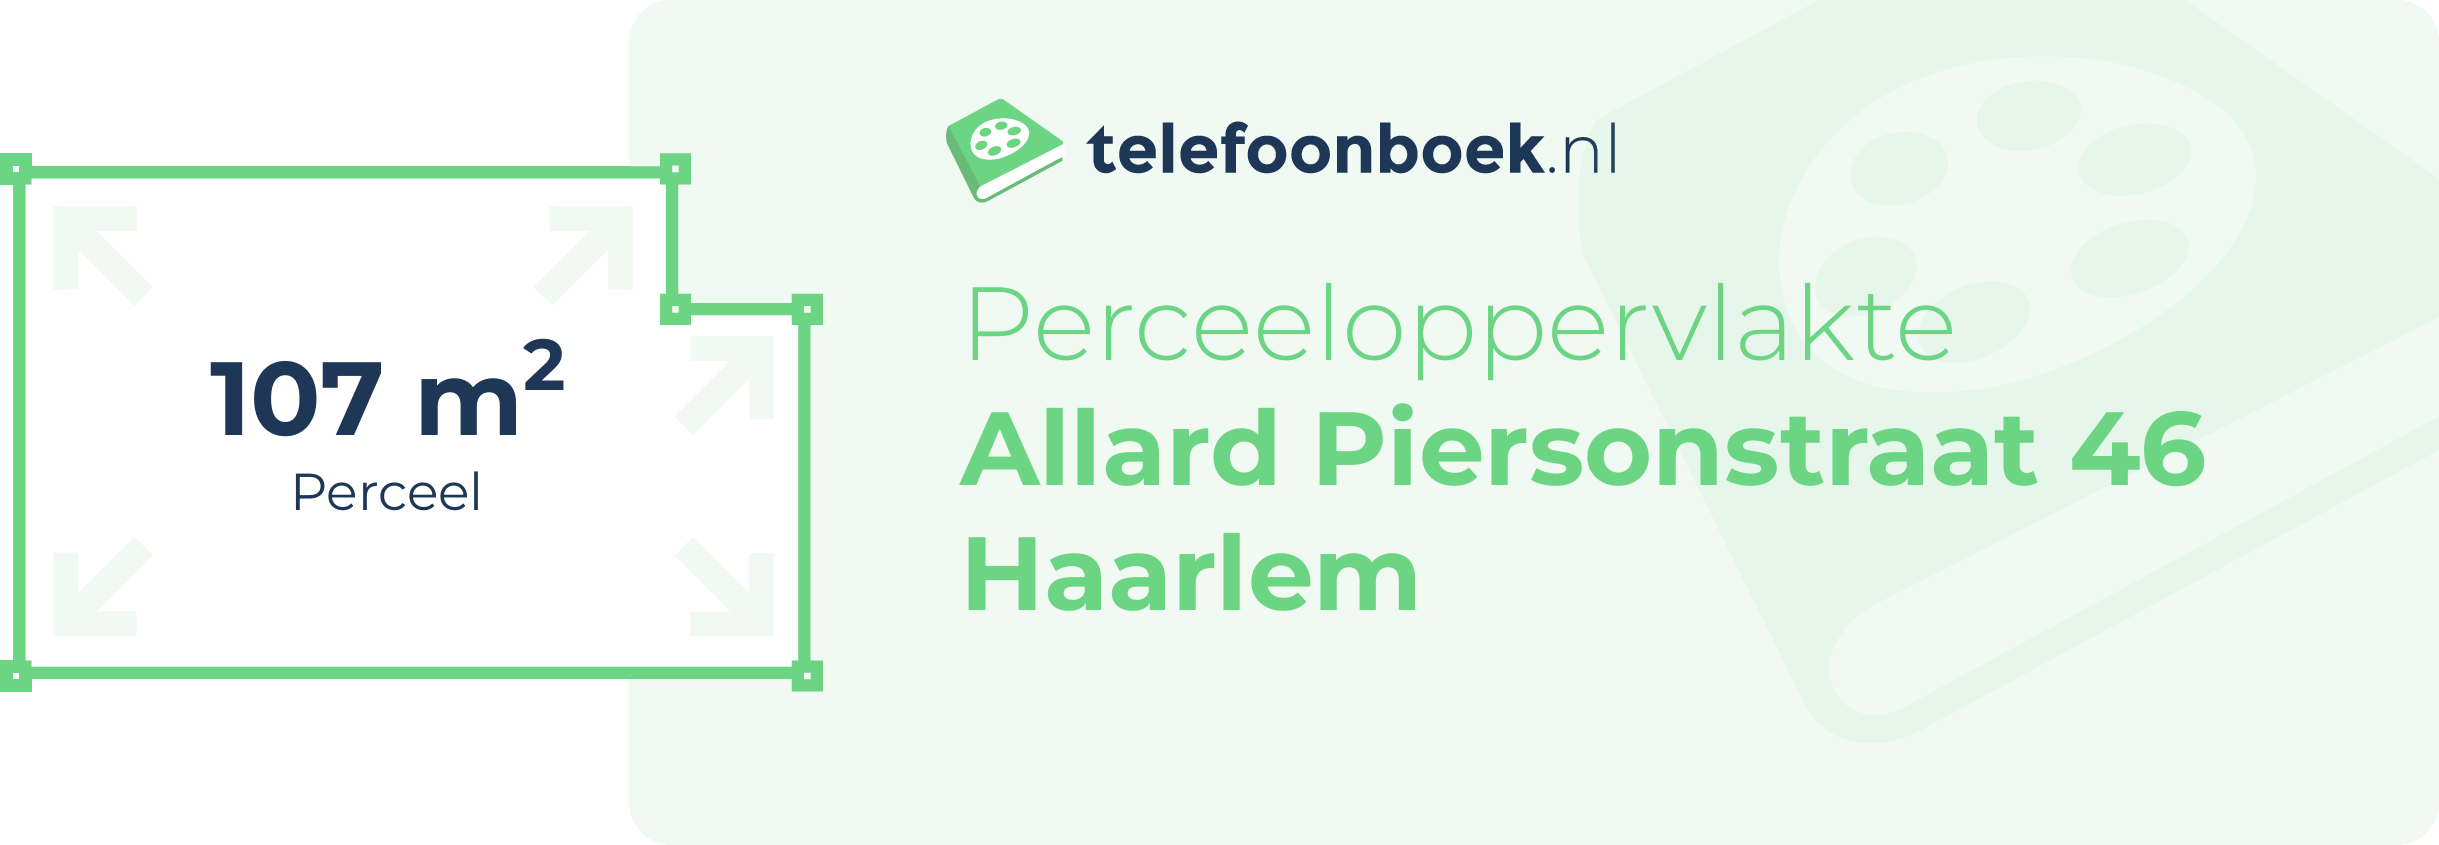 Perceeloppervlakte Allard Piersonstraat 46 Haarlem